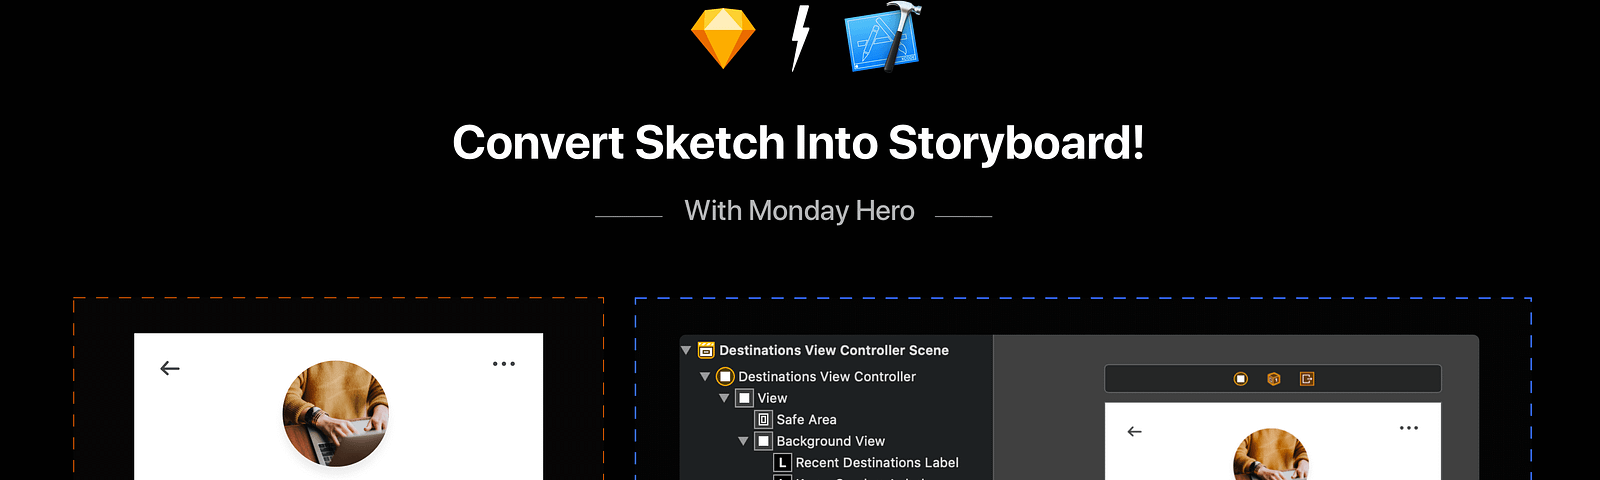 Convert Sketch designs into Storyboard scenes with Monday Hero.